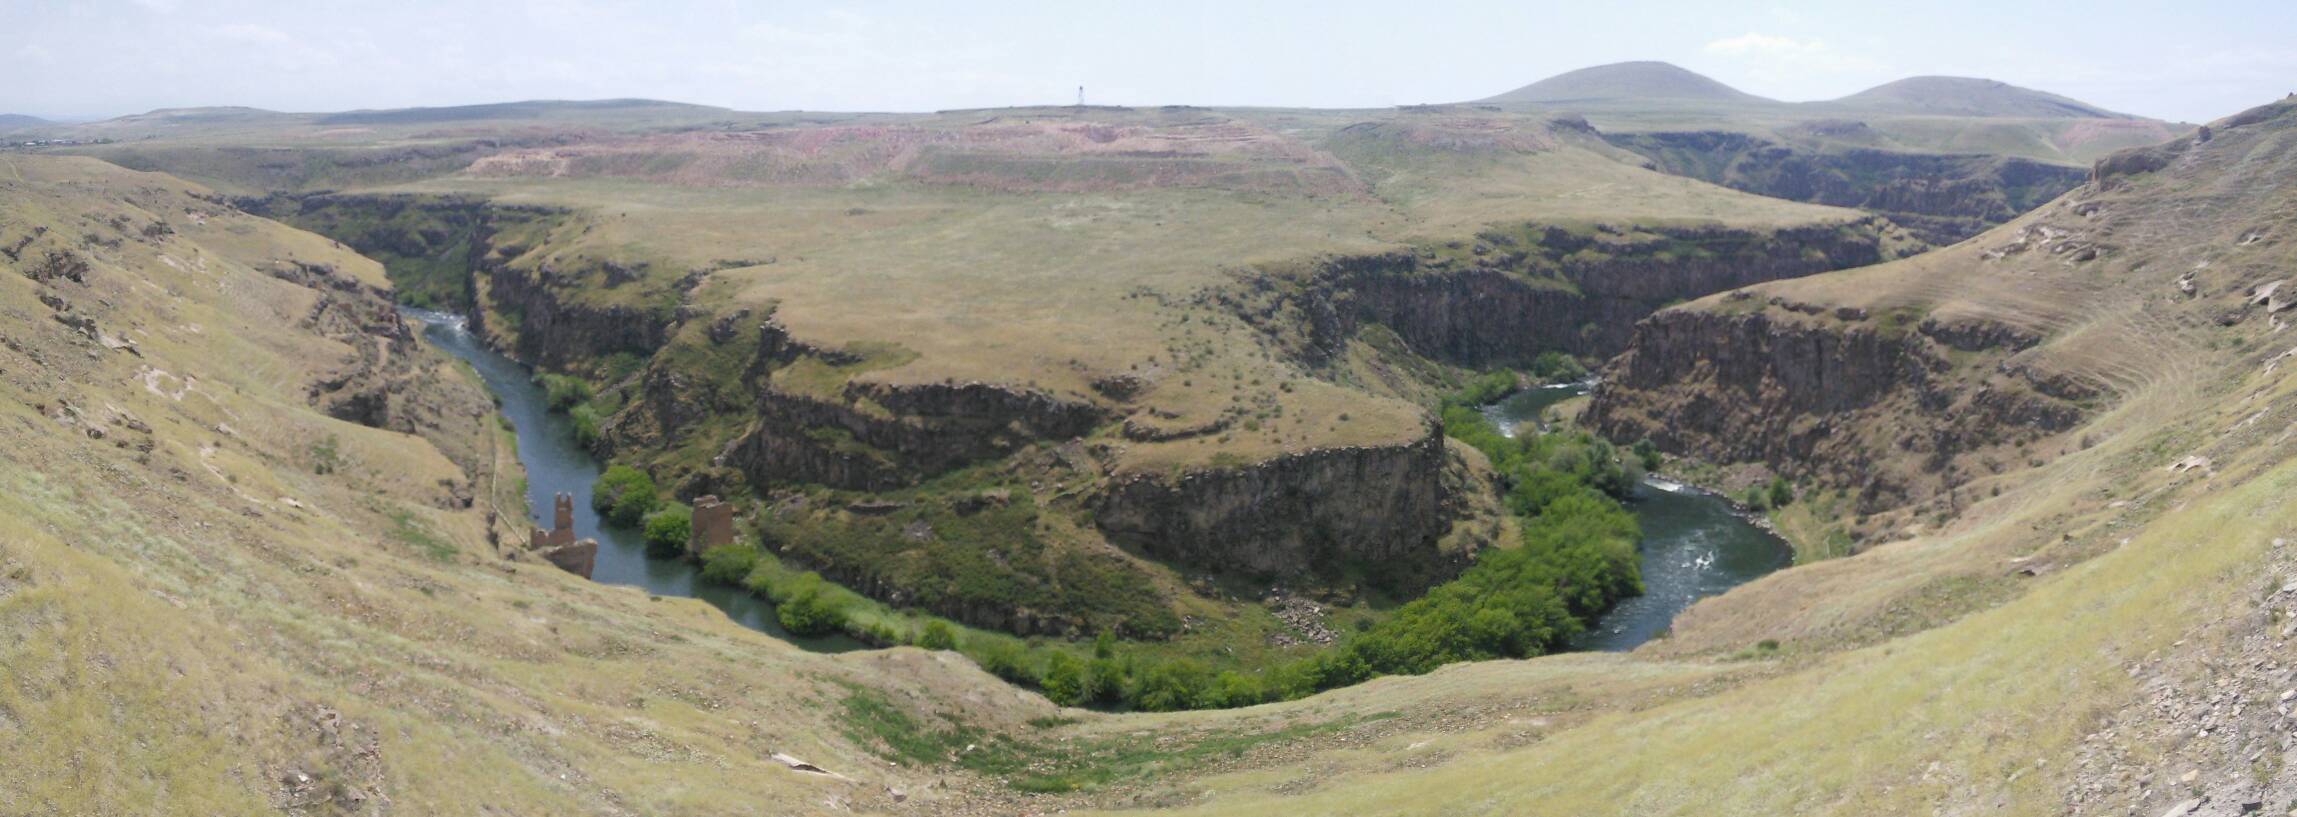 River at Ani - Border Turkey Armenia